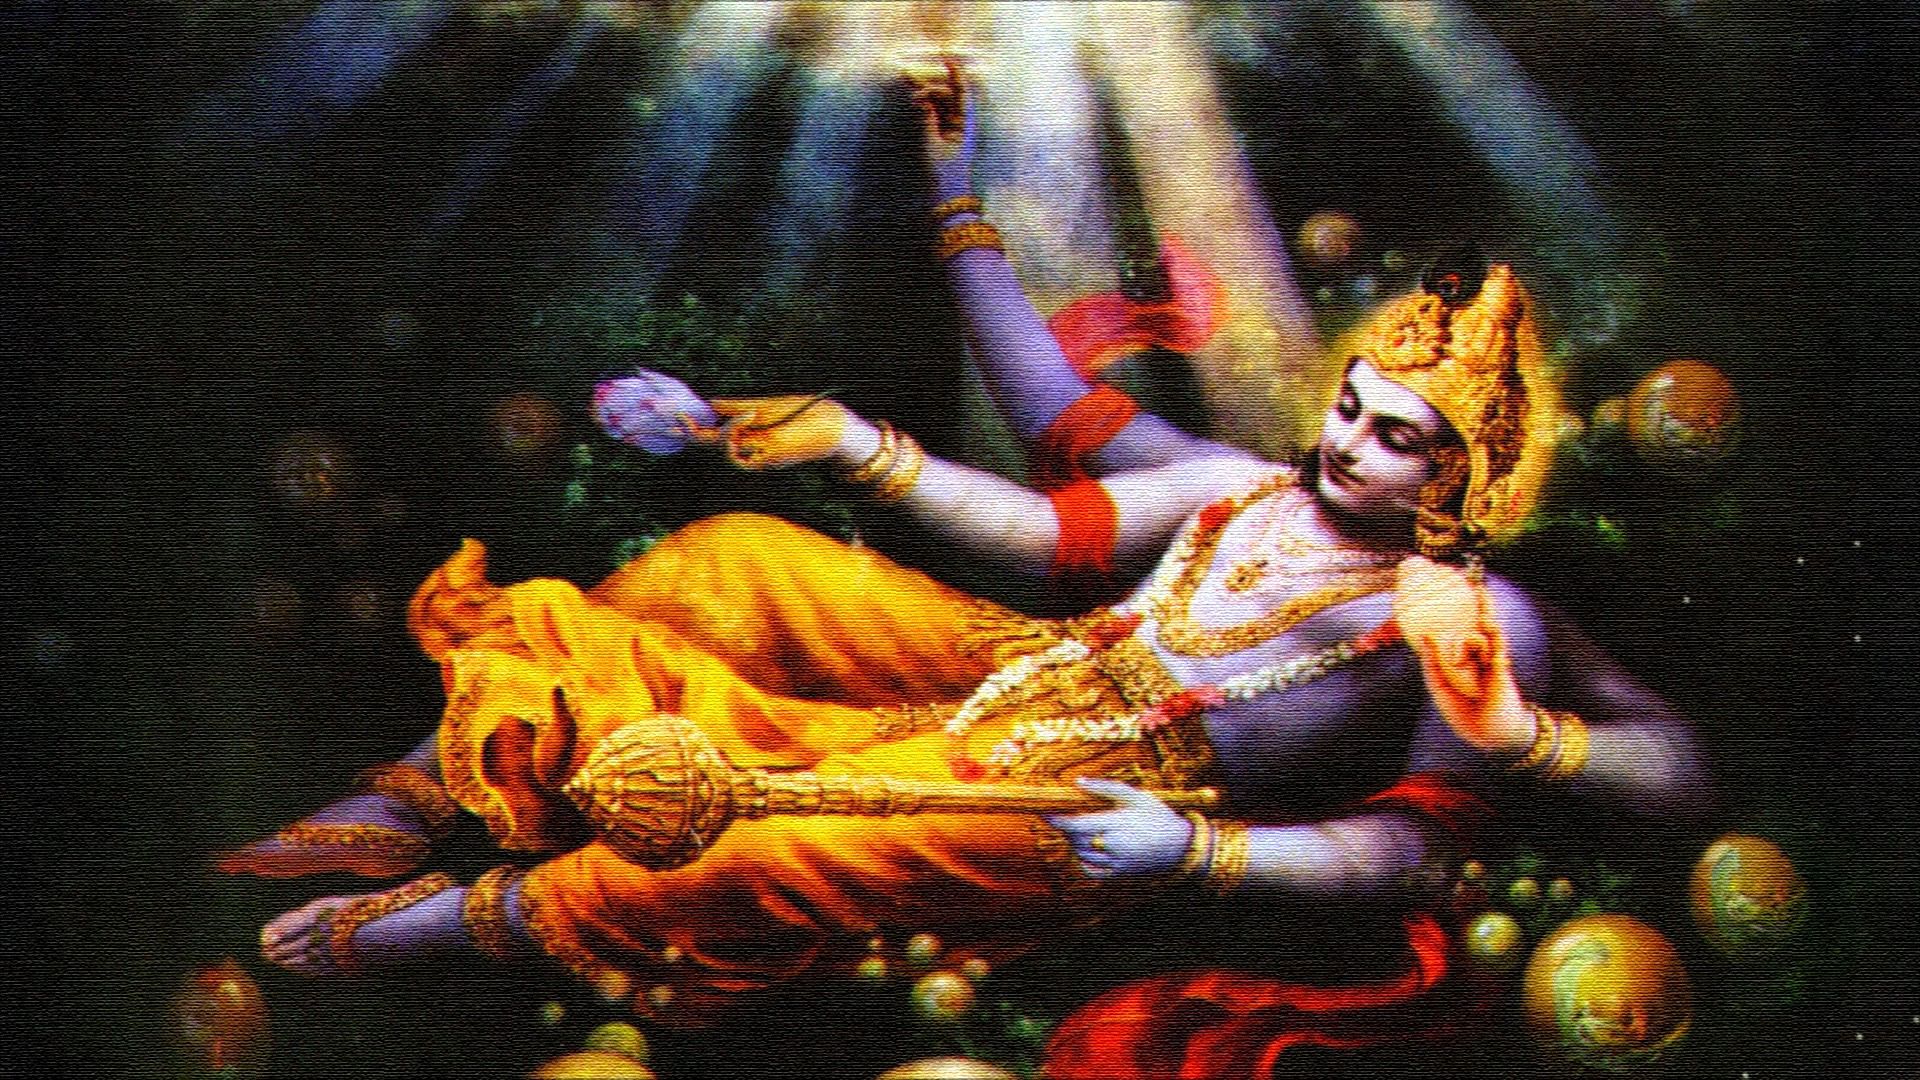 Vishnu Avatar Image. Hindu Gods and Goddesses